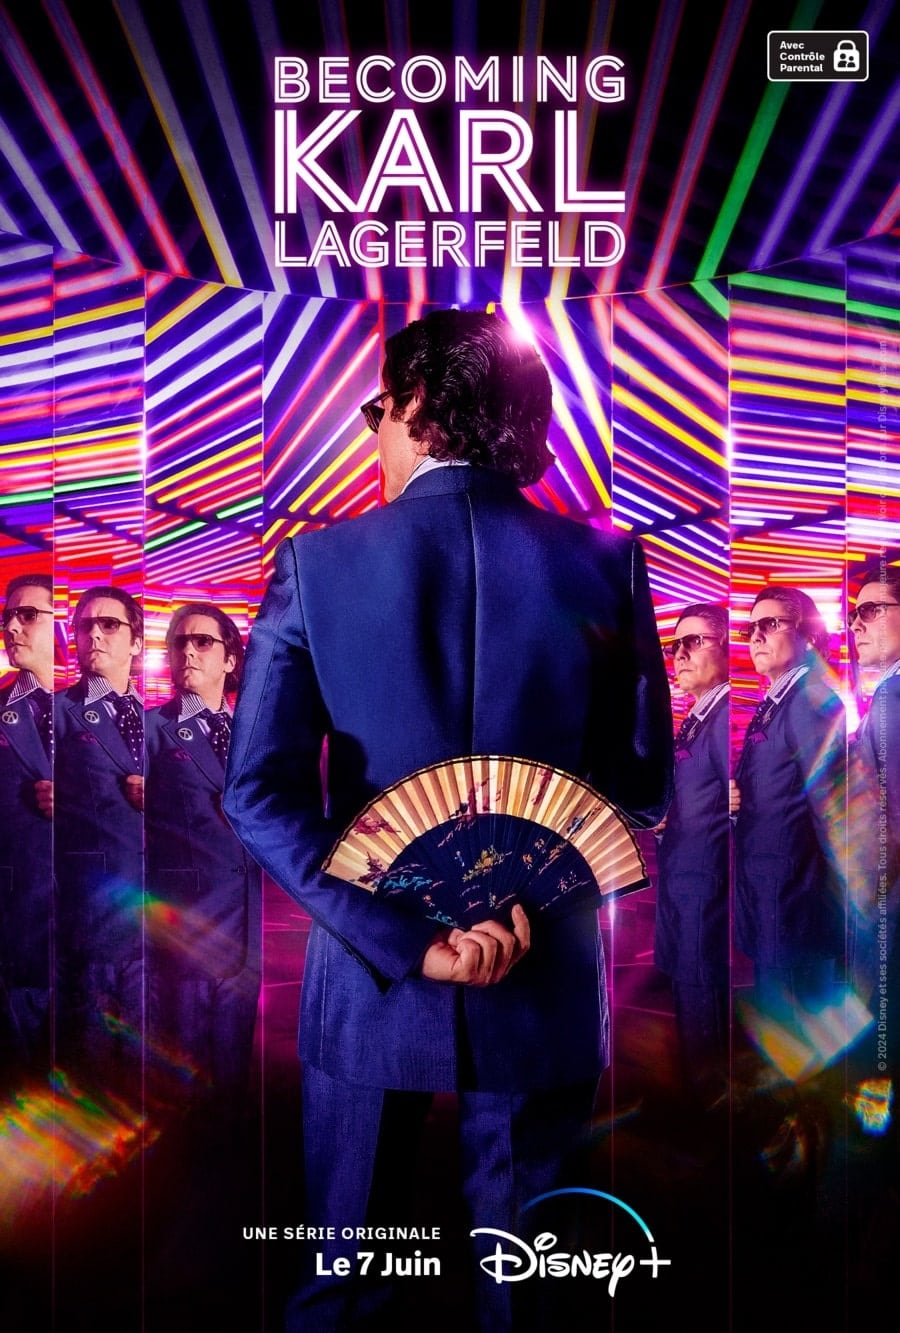 Becoming-Karl-Lagerfeld-Poster Becoming Karl Lagerfeld: Série com Daniel Brühl lança primeiro trailer